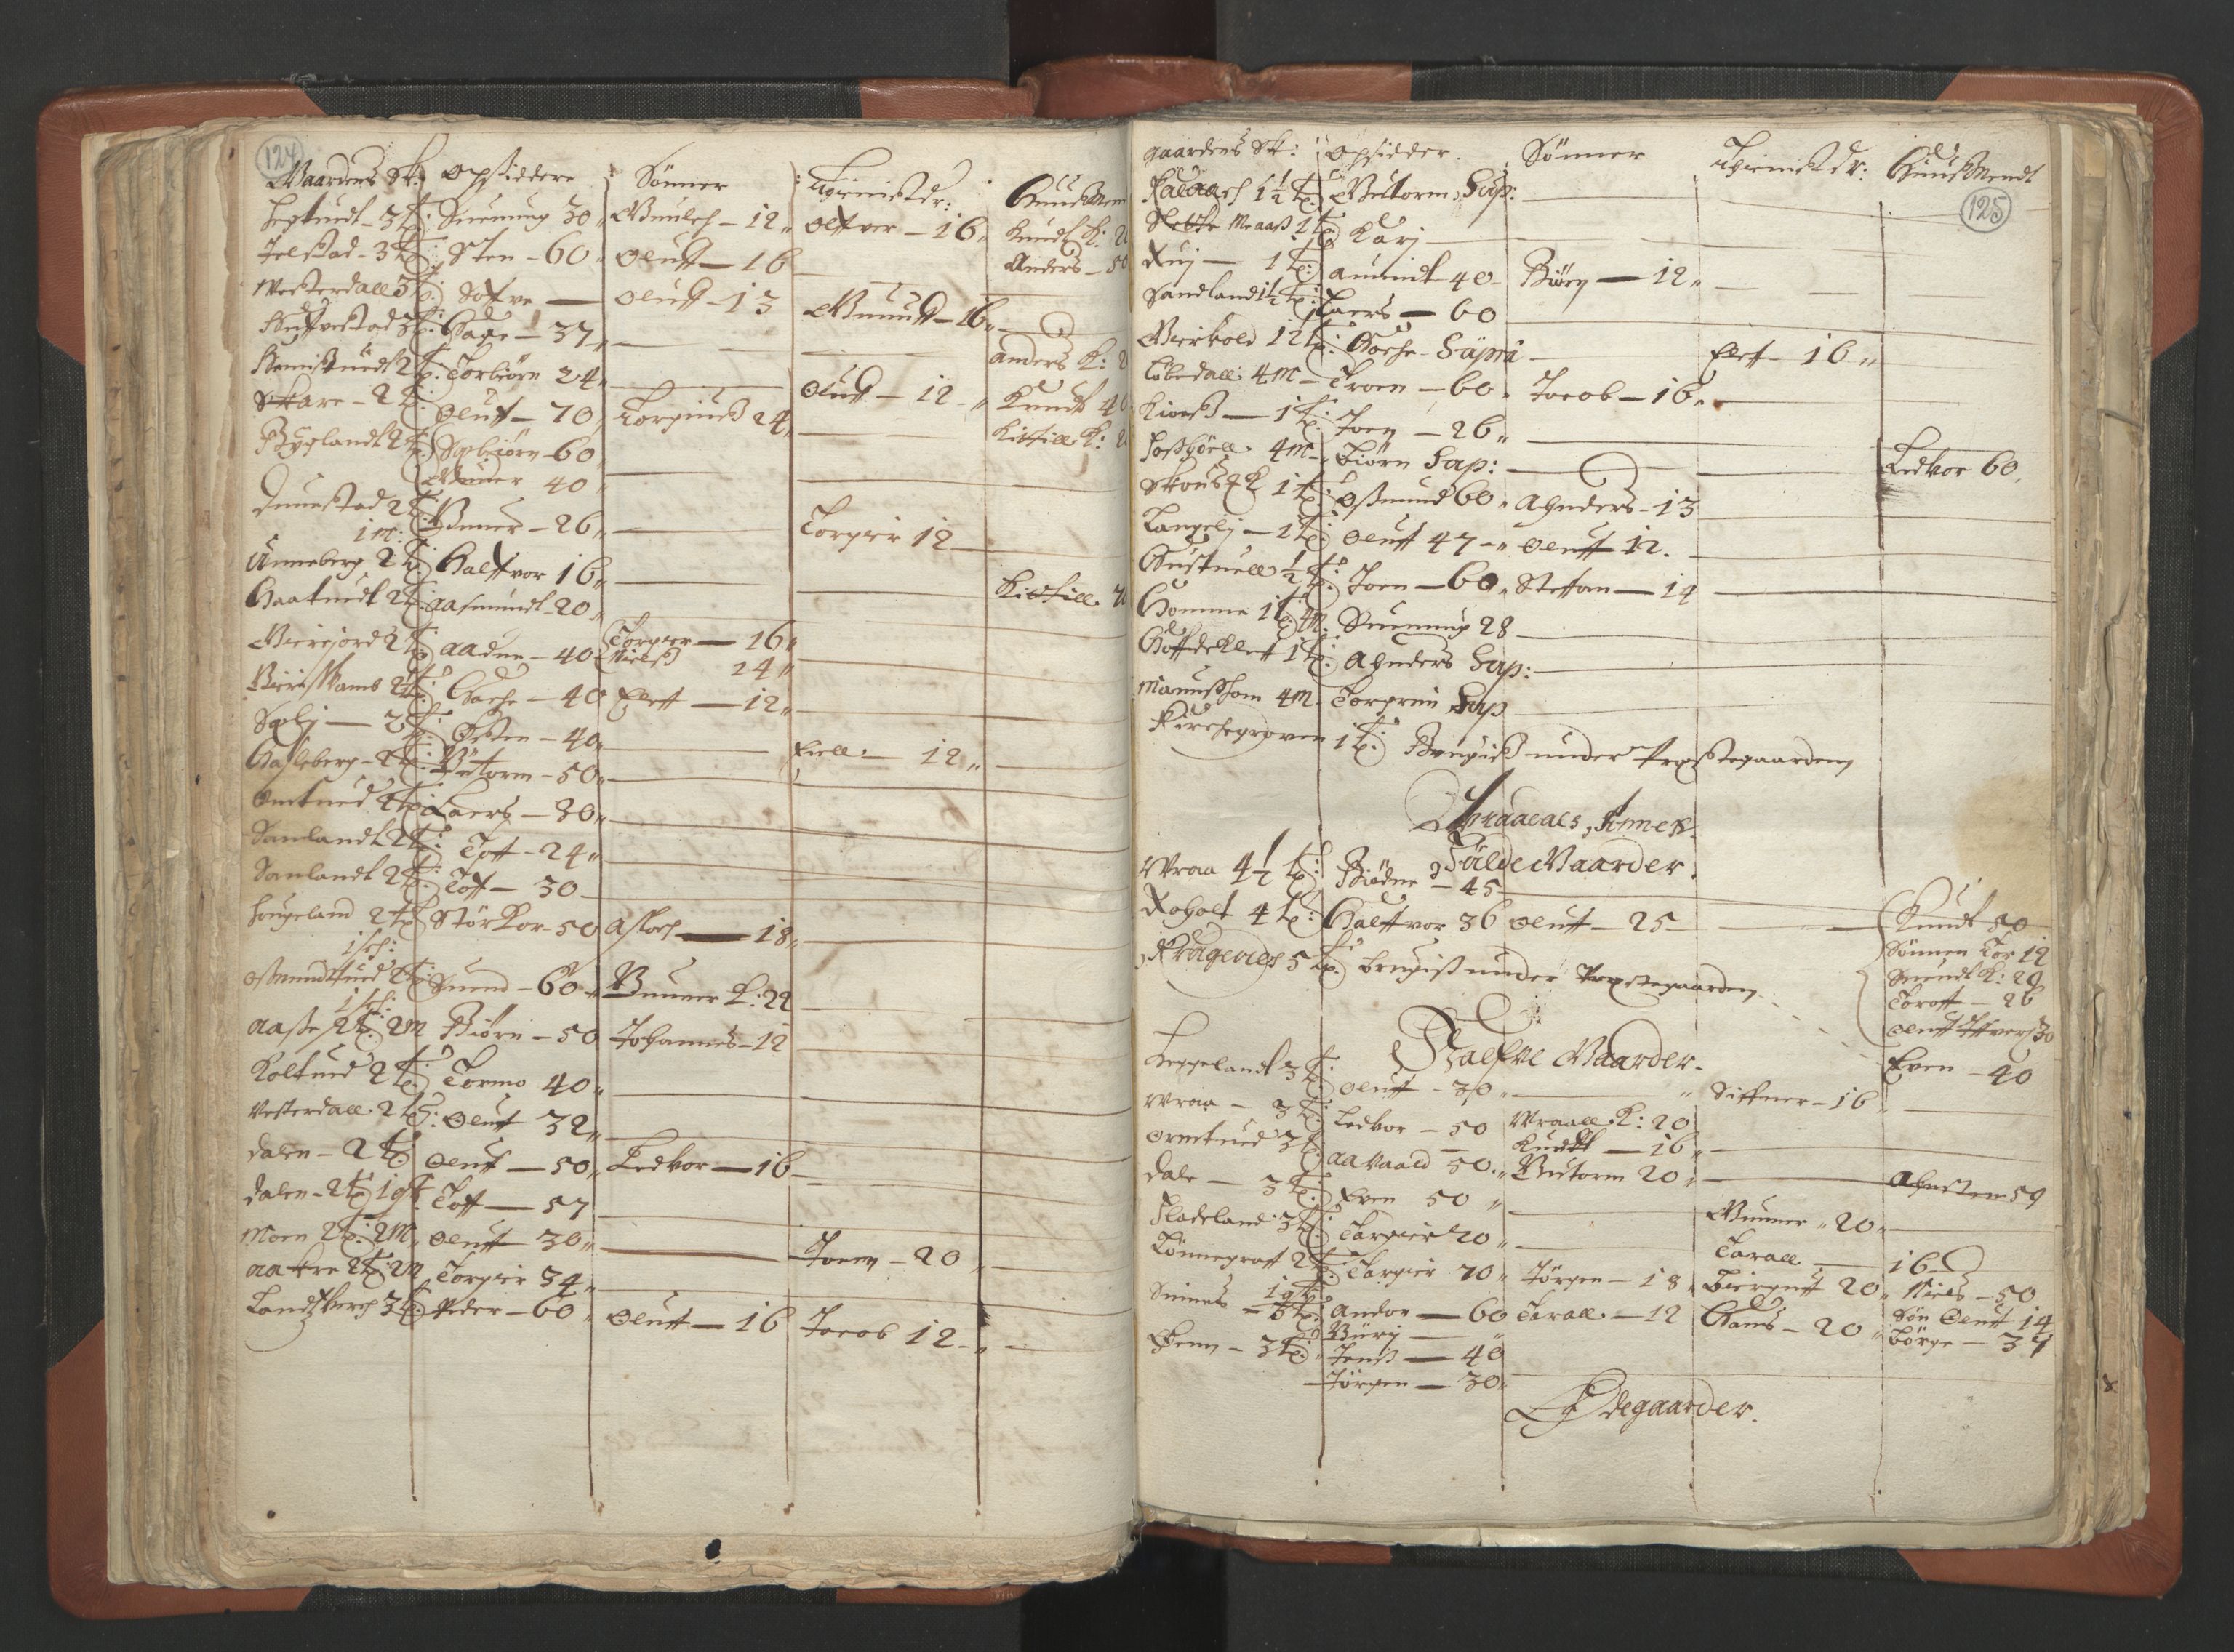 RA, Vicar's Census 1664-1666, no. 12: Øvre Telemark deanery, Nedre Telemark deanery and Bamble deanery, 1664-1666, p. 124-125